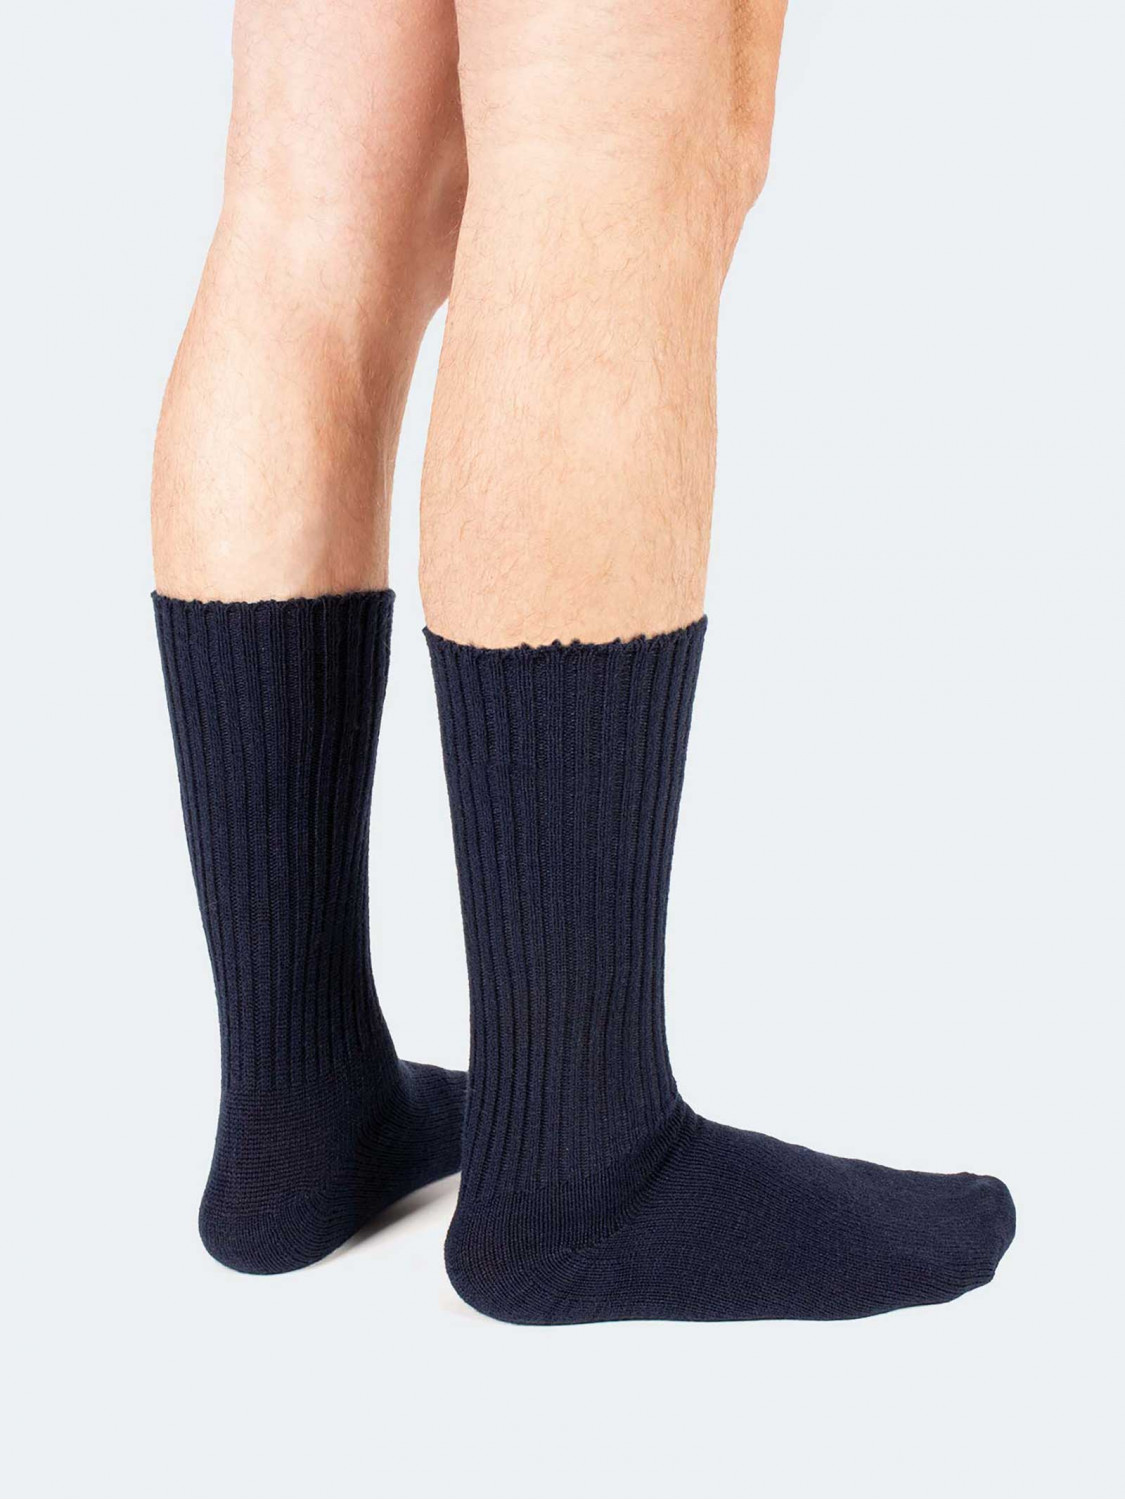 Soft calf socks - Made in Italy